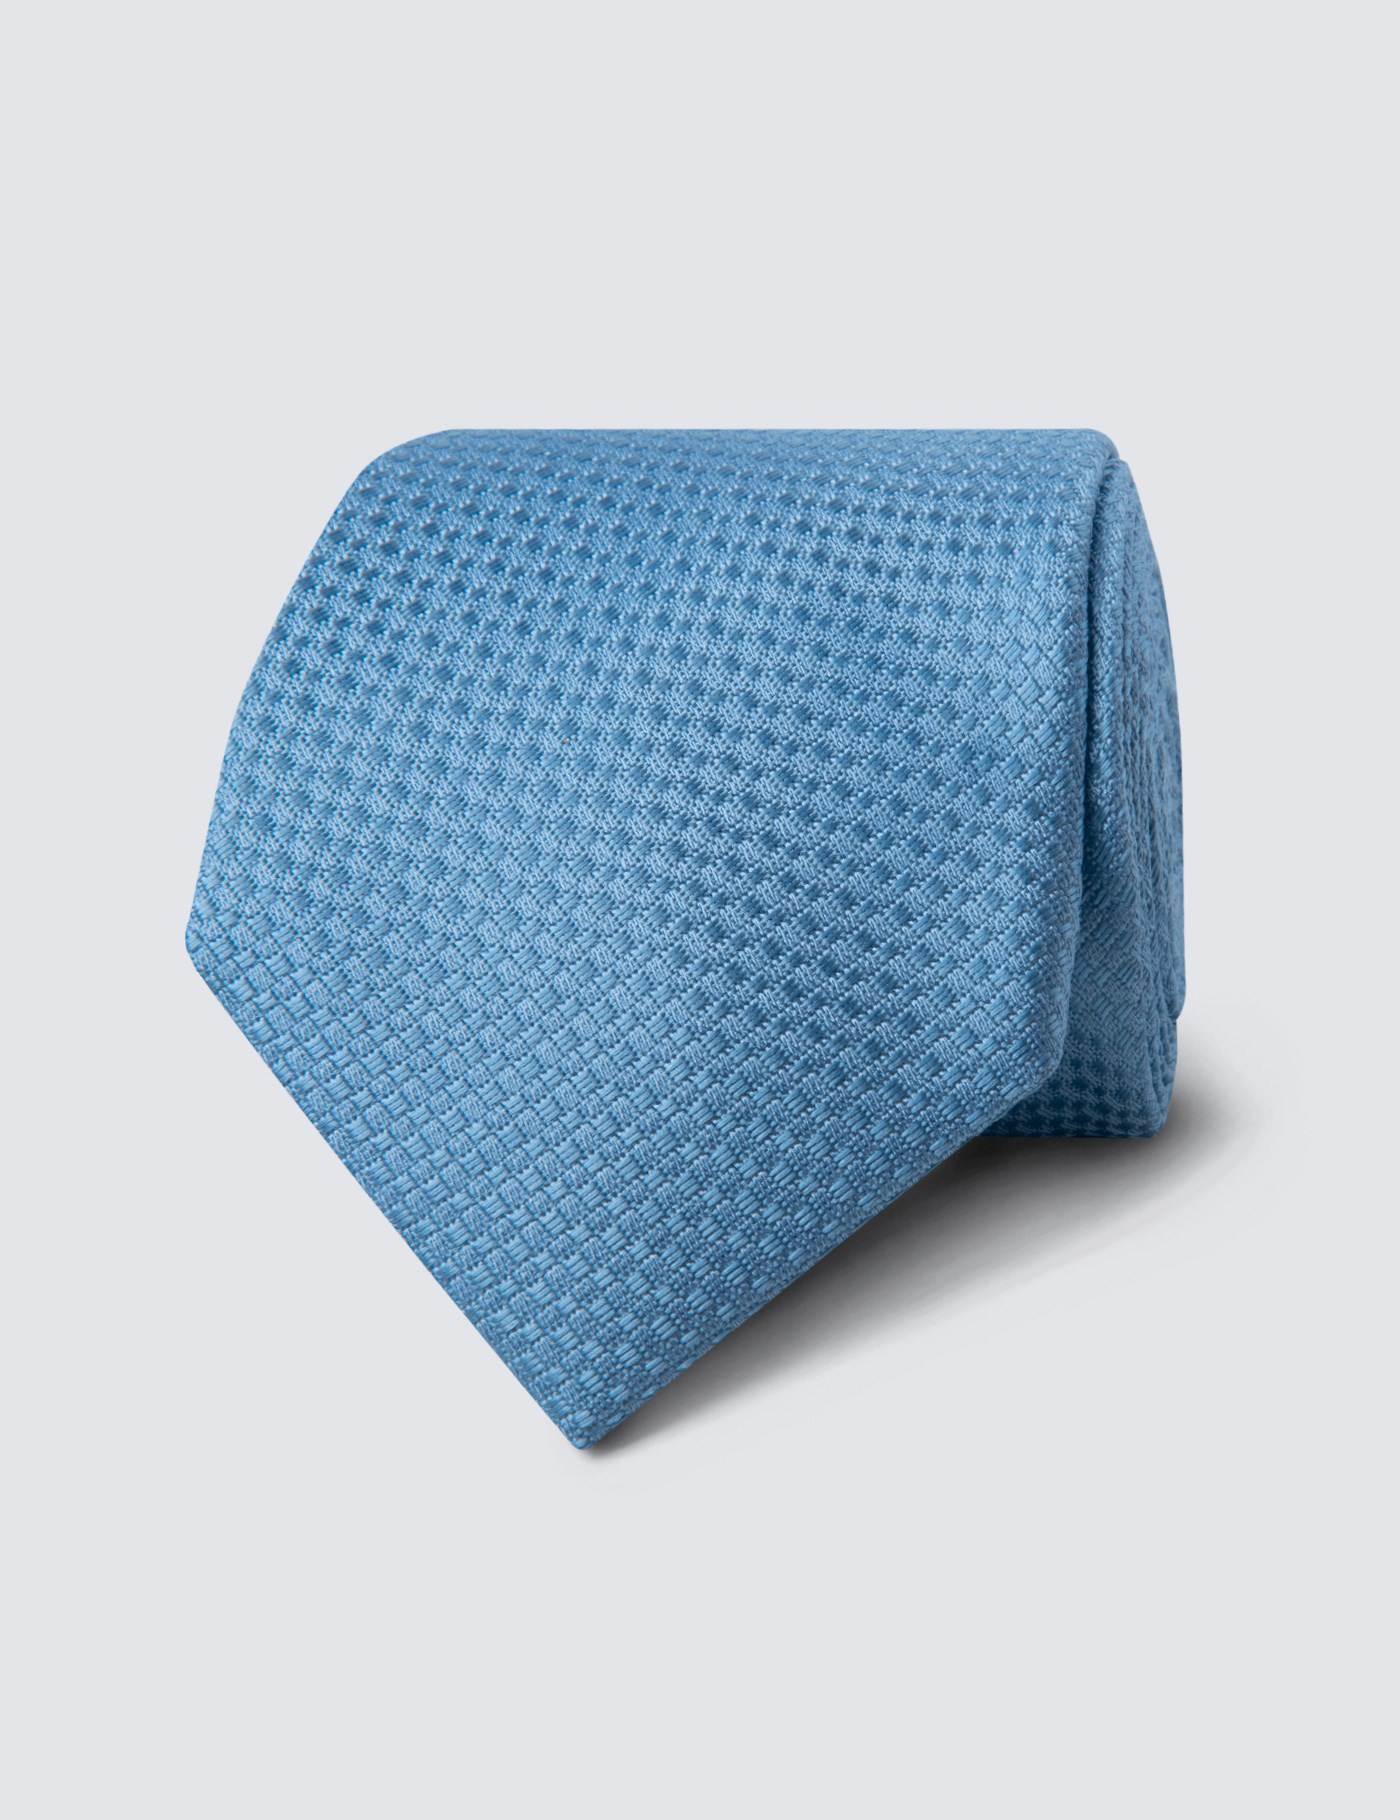 hawes & curtis men's light blue textured plain tie - 100% silk